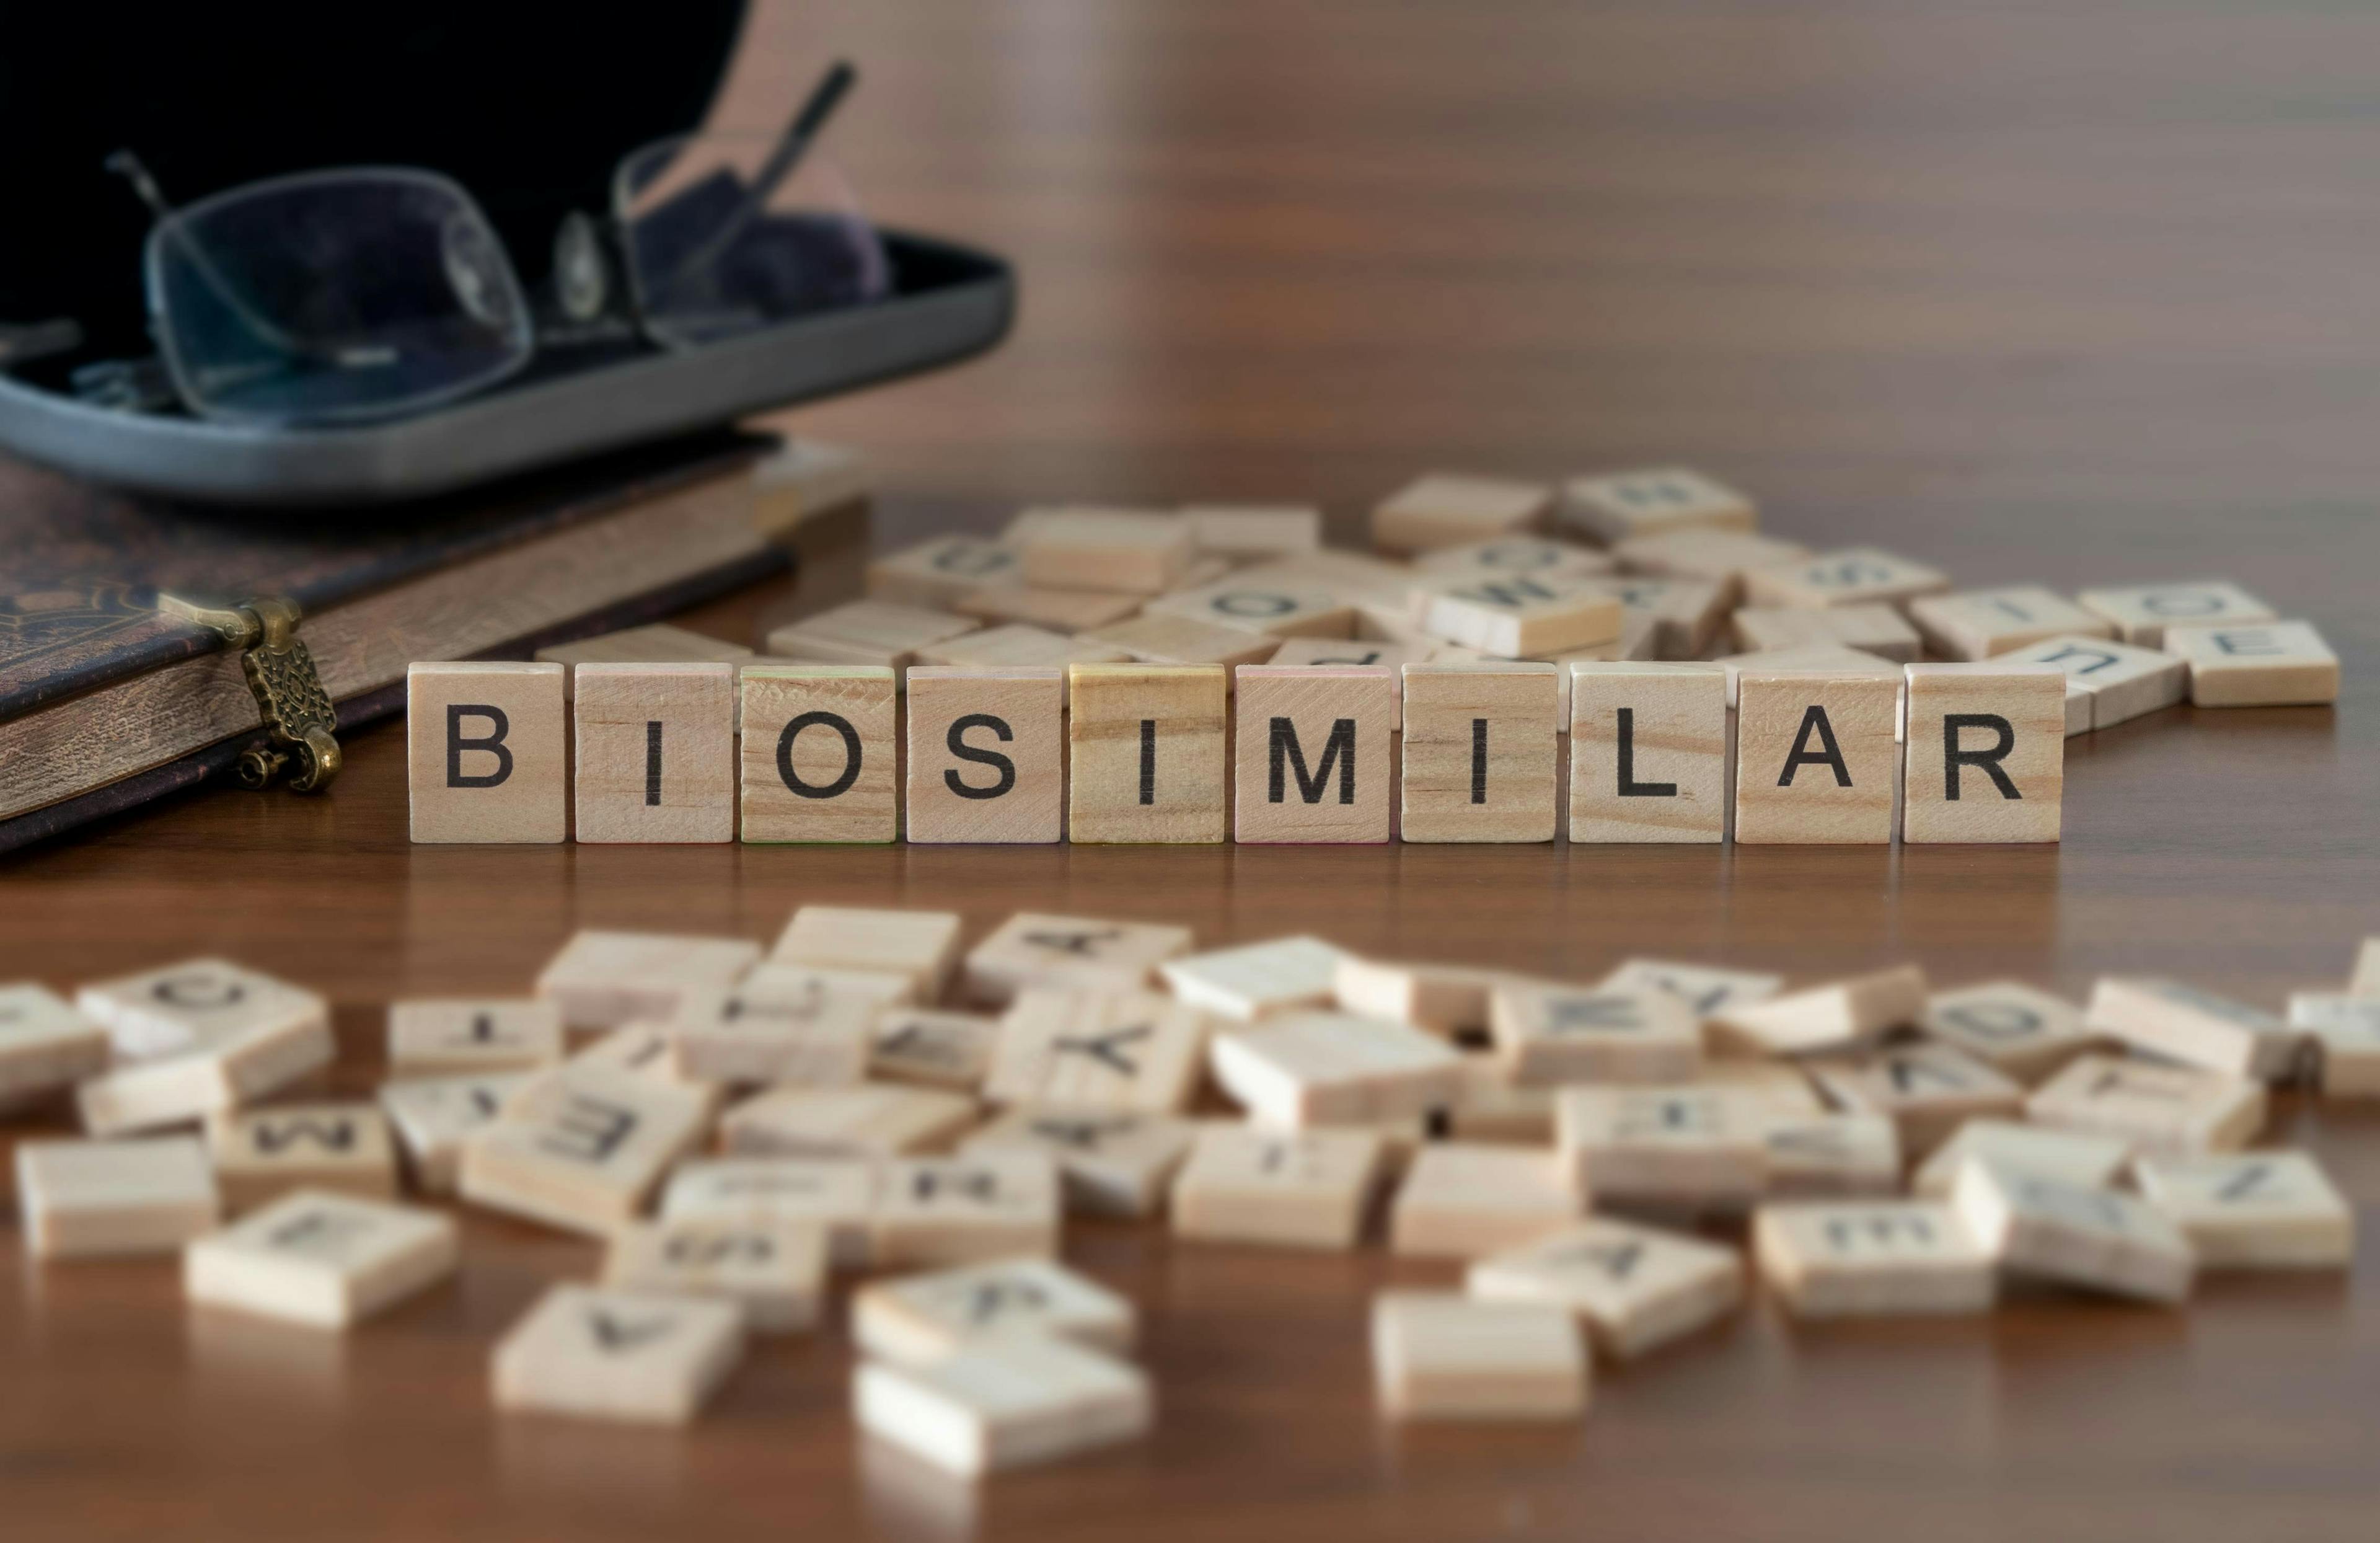 biosimilars written in scrabble tiles | Image credit: lexiconimages - stock.adobe.com